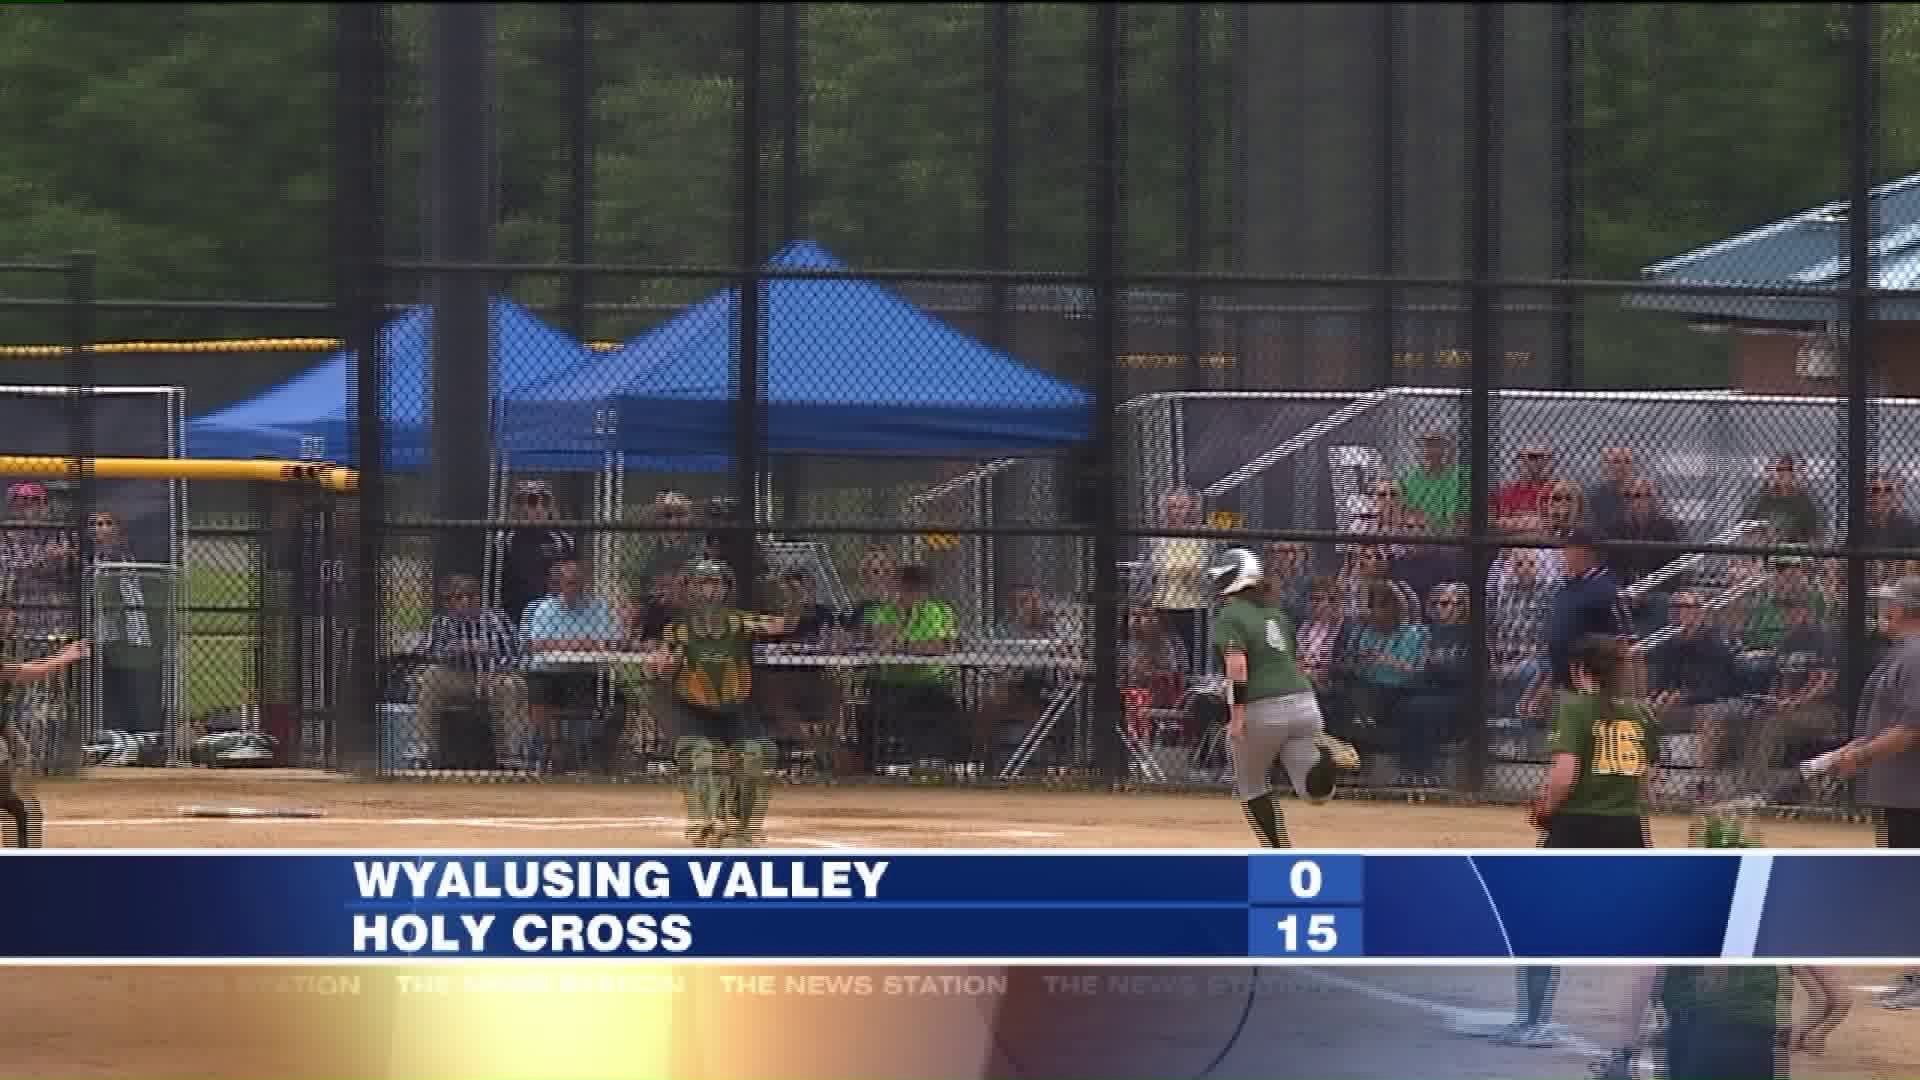 Wyalusing vs Holy Cross softball